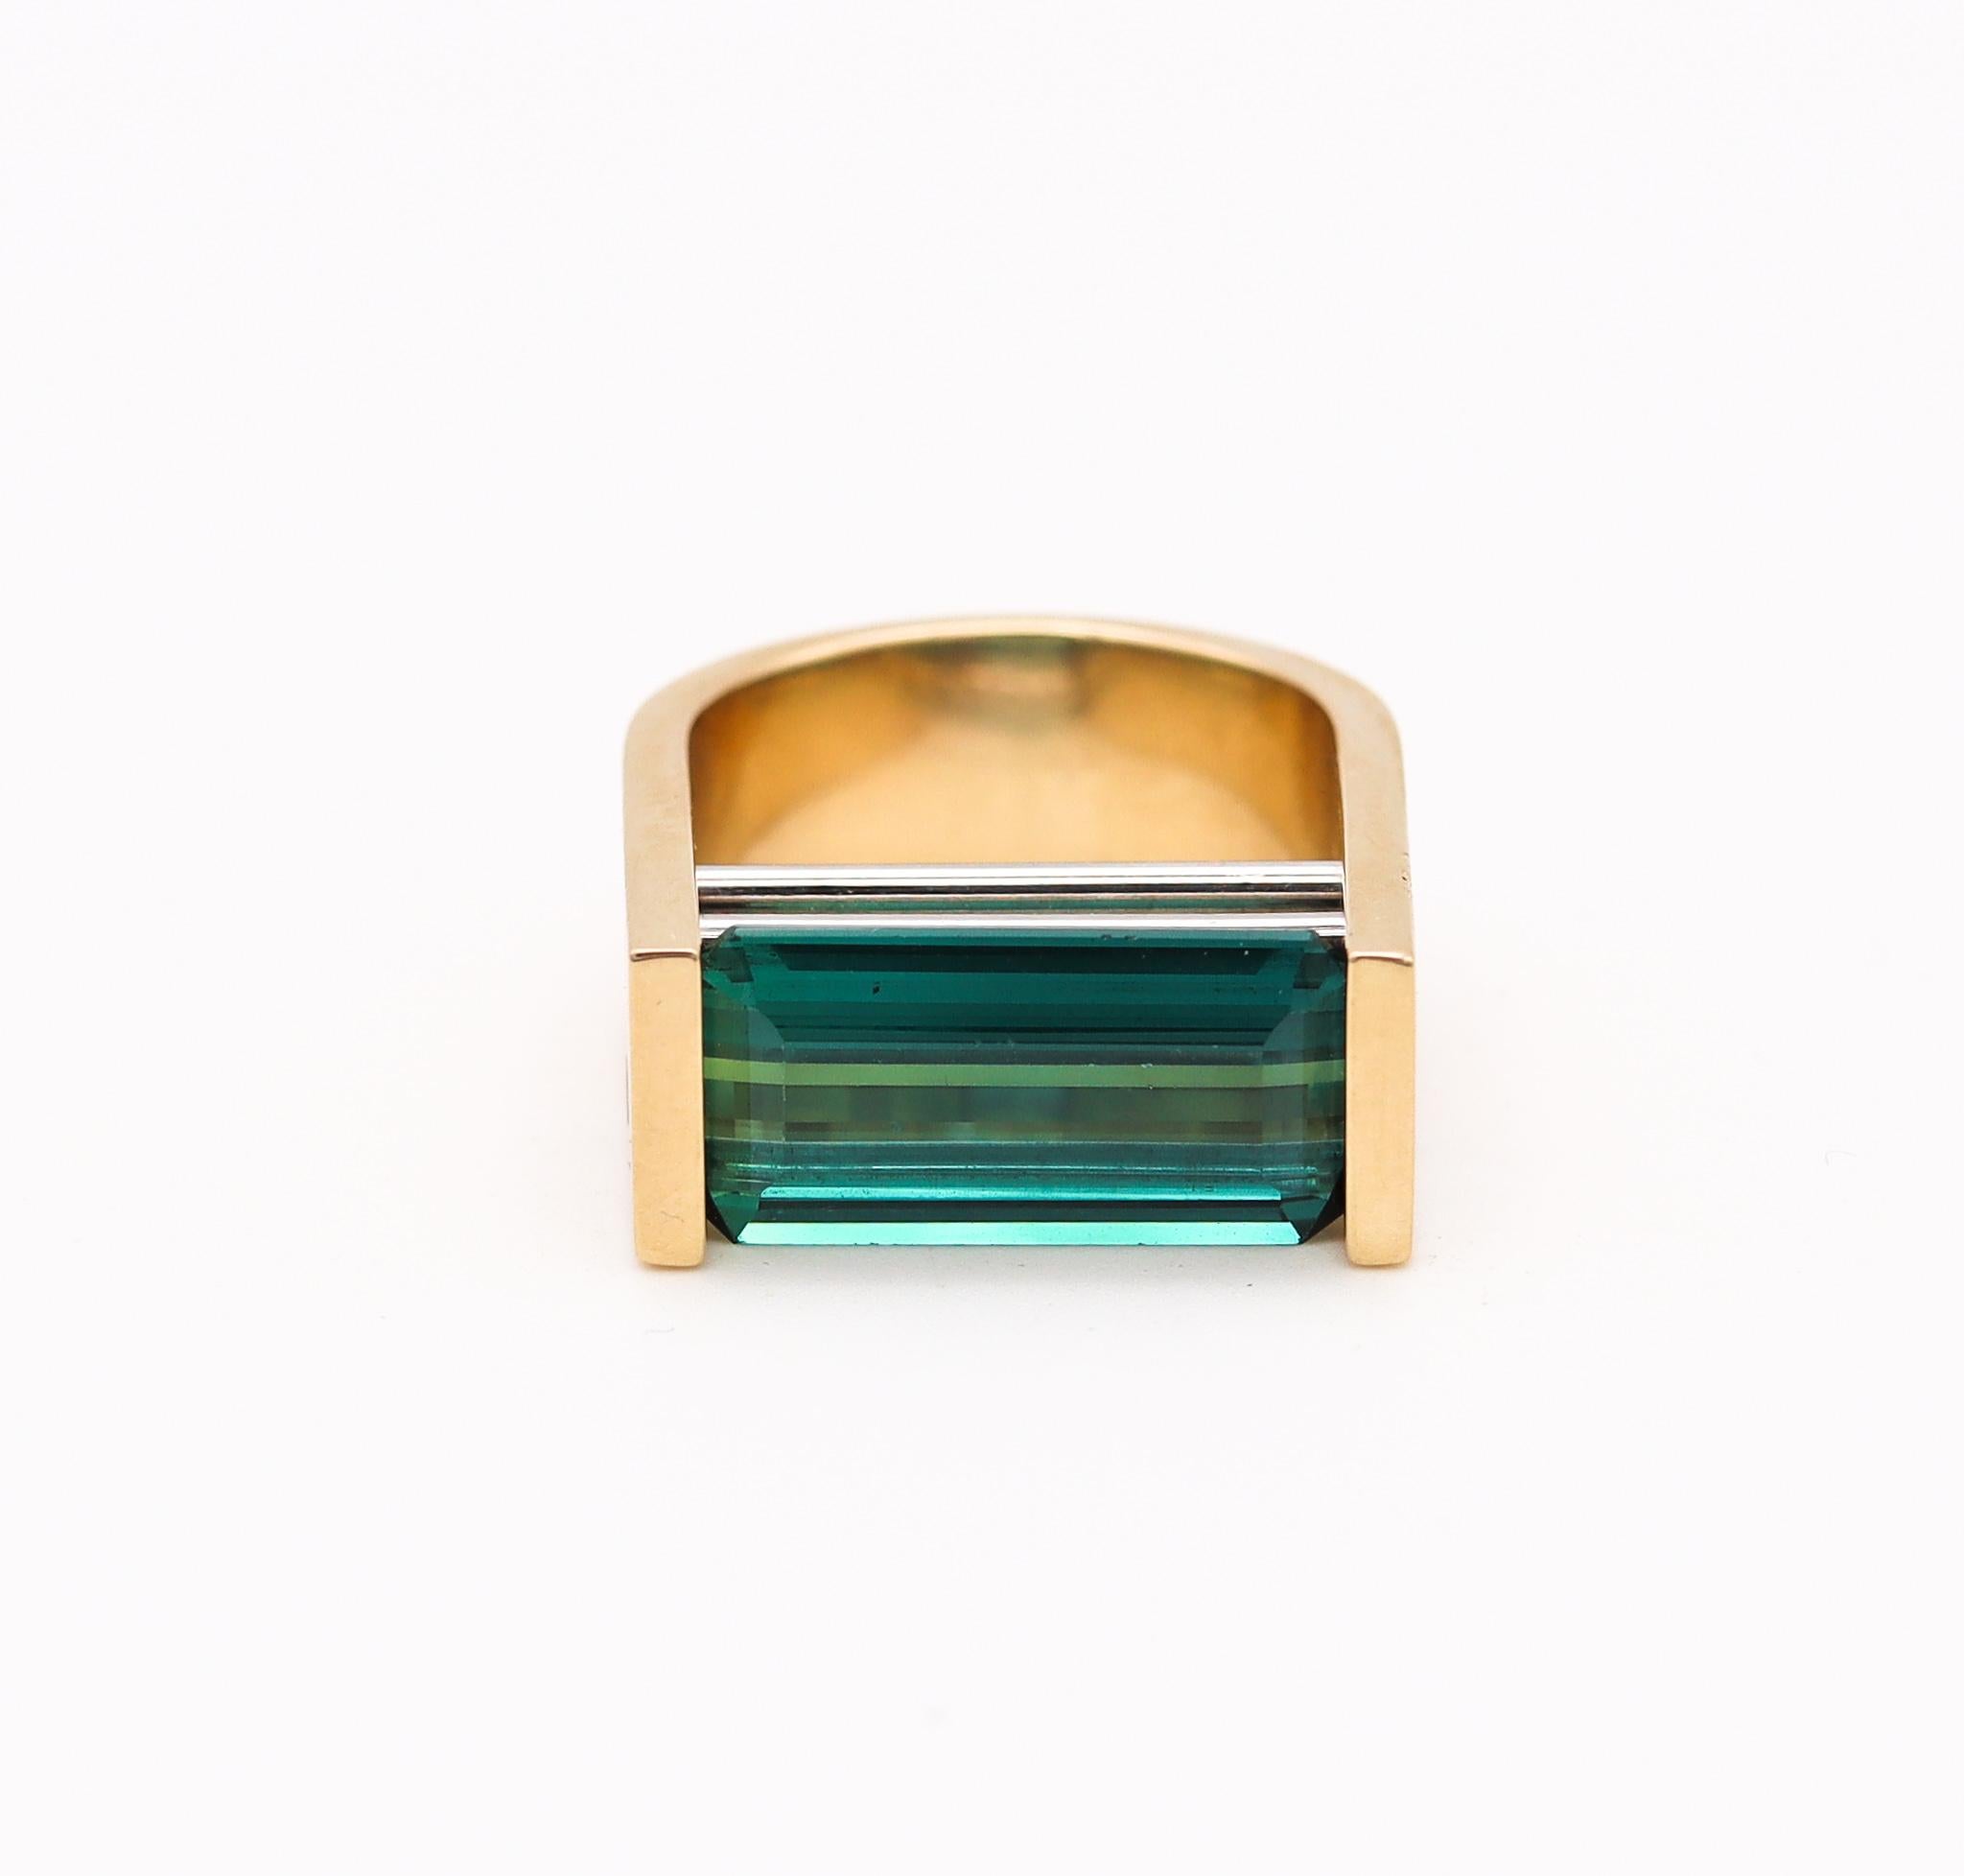 Modernist Geometric Bauhaus Ring 18Kt Gold Platinum 6.87 Cts Chrome Tourmaline 4